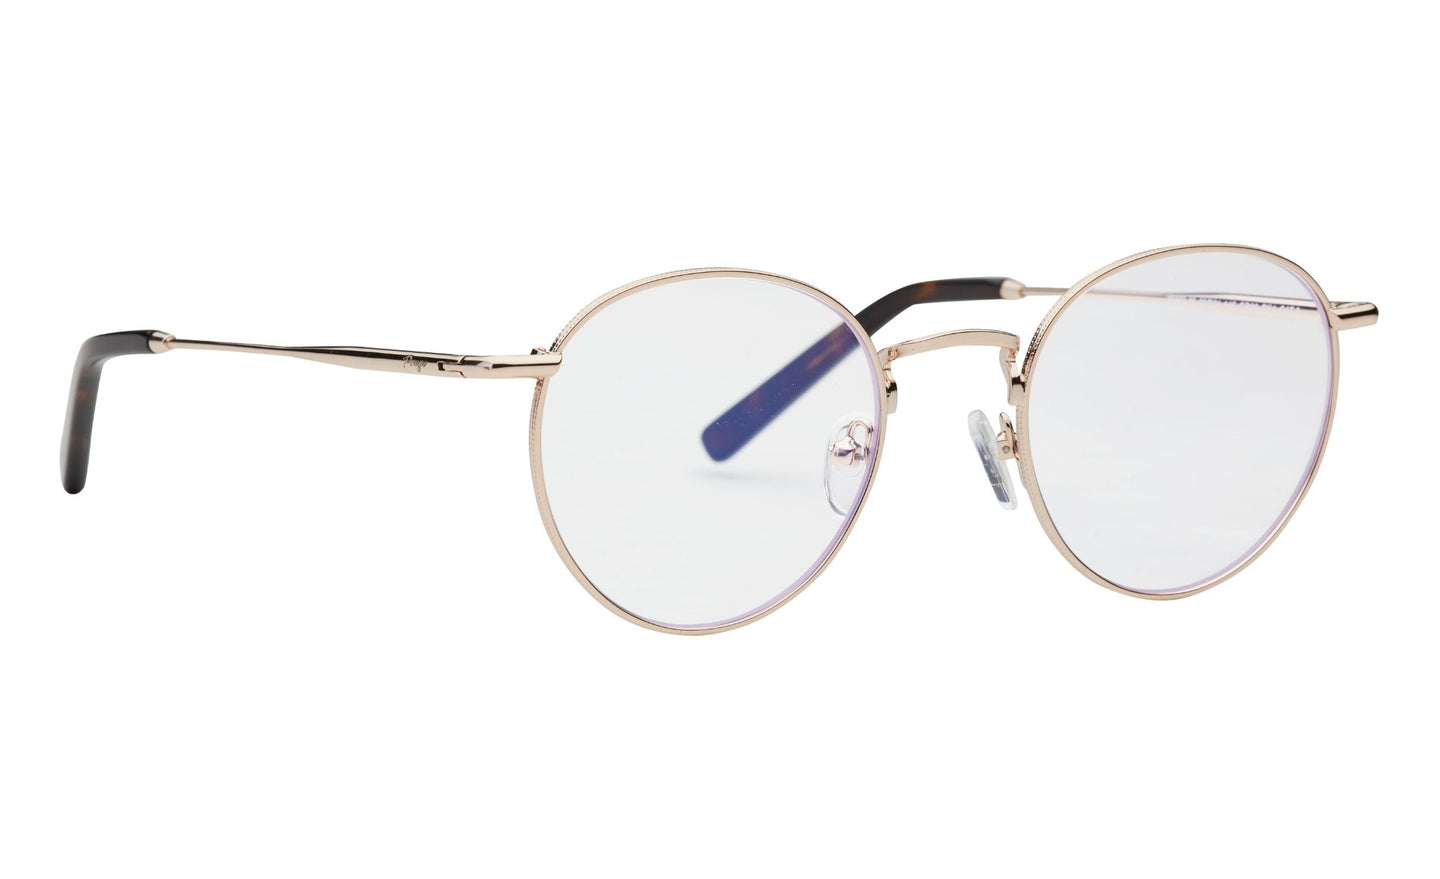 PREGO - Porlezza - Round Bluelight Glasses